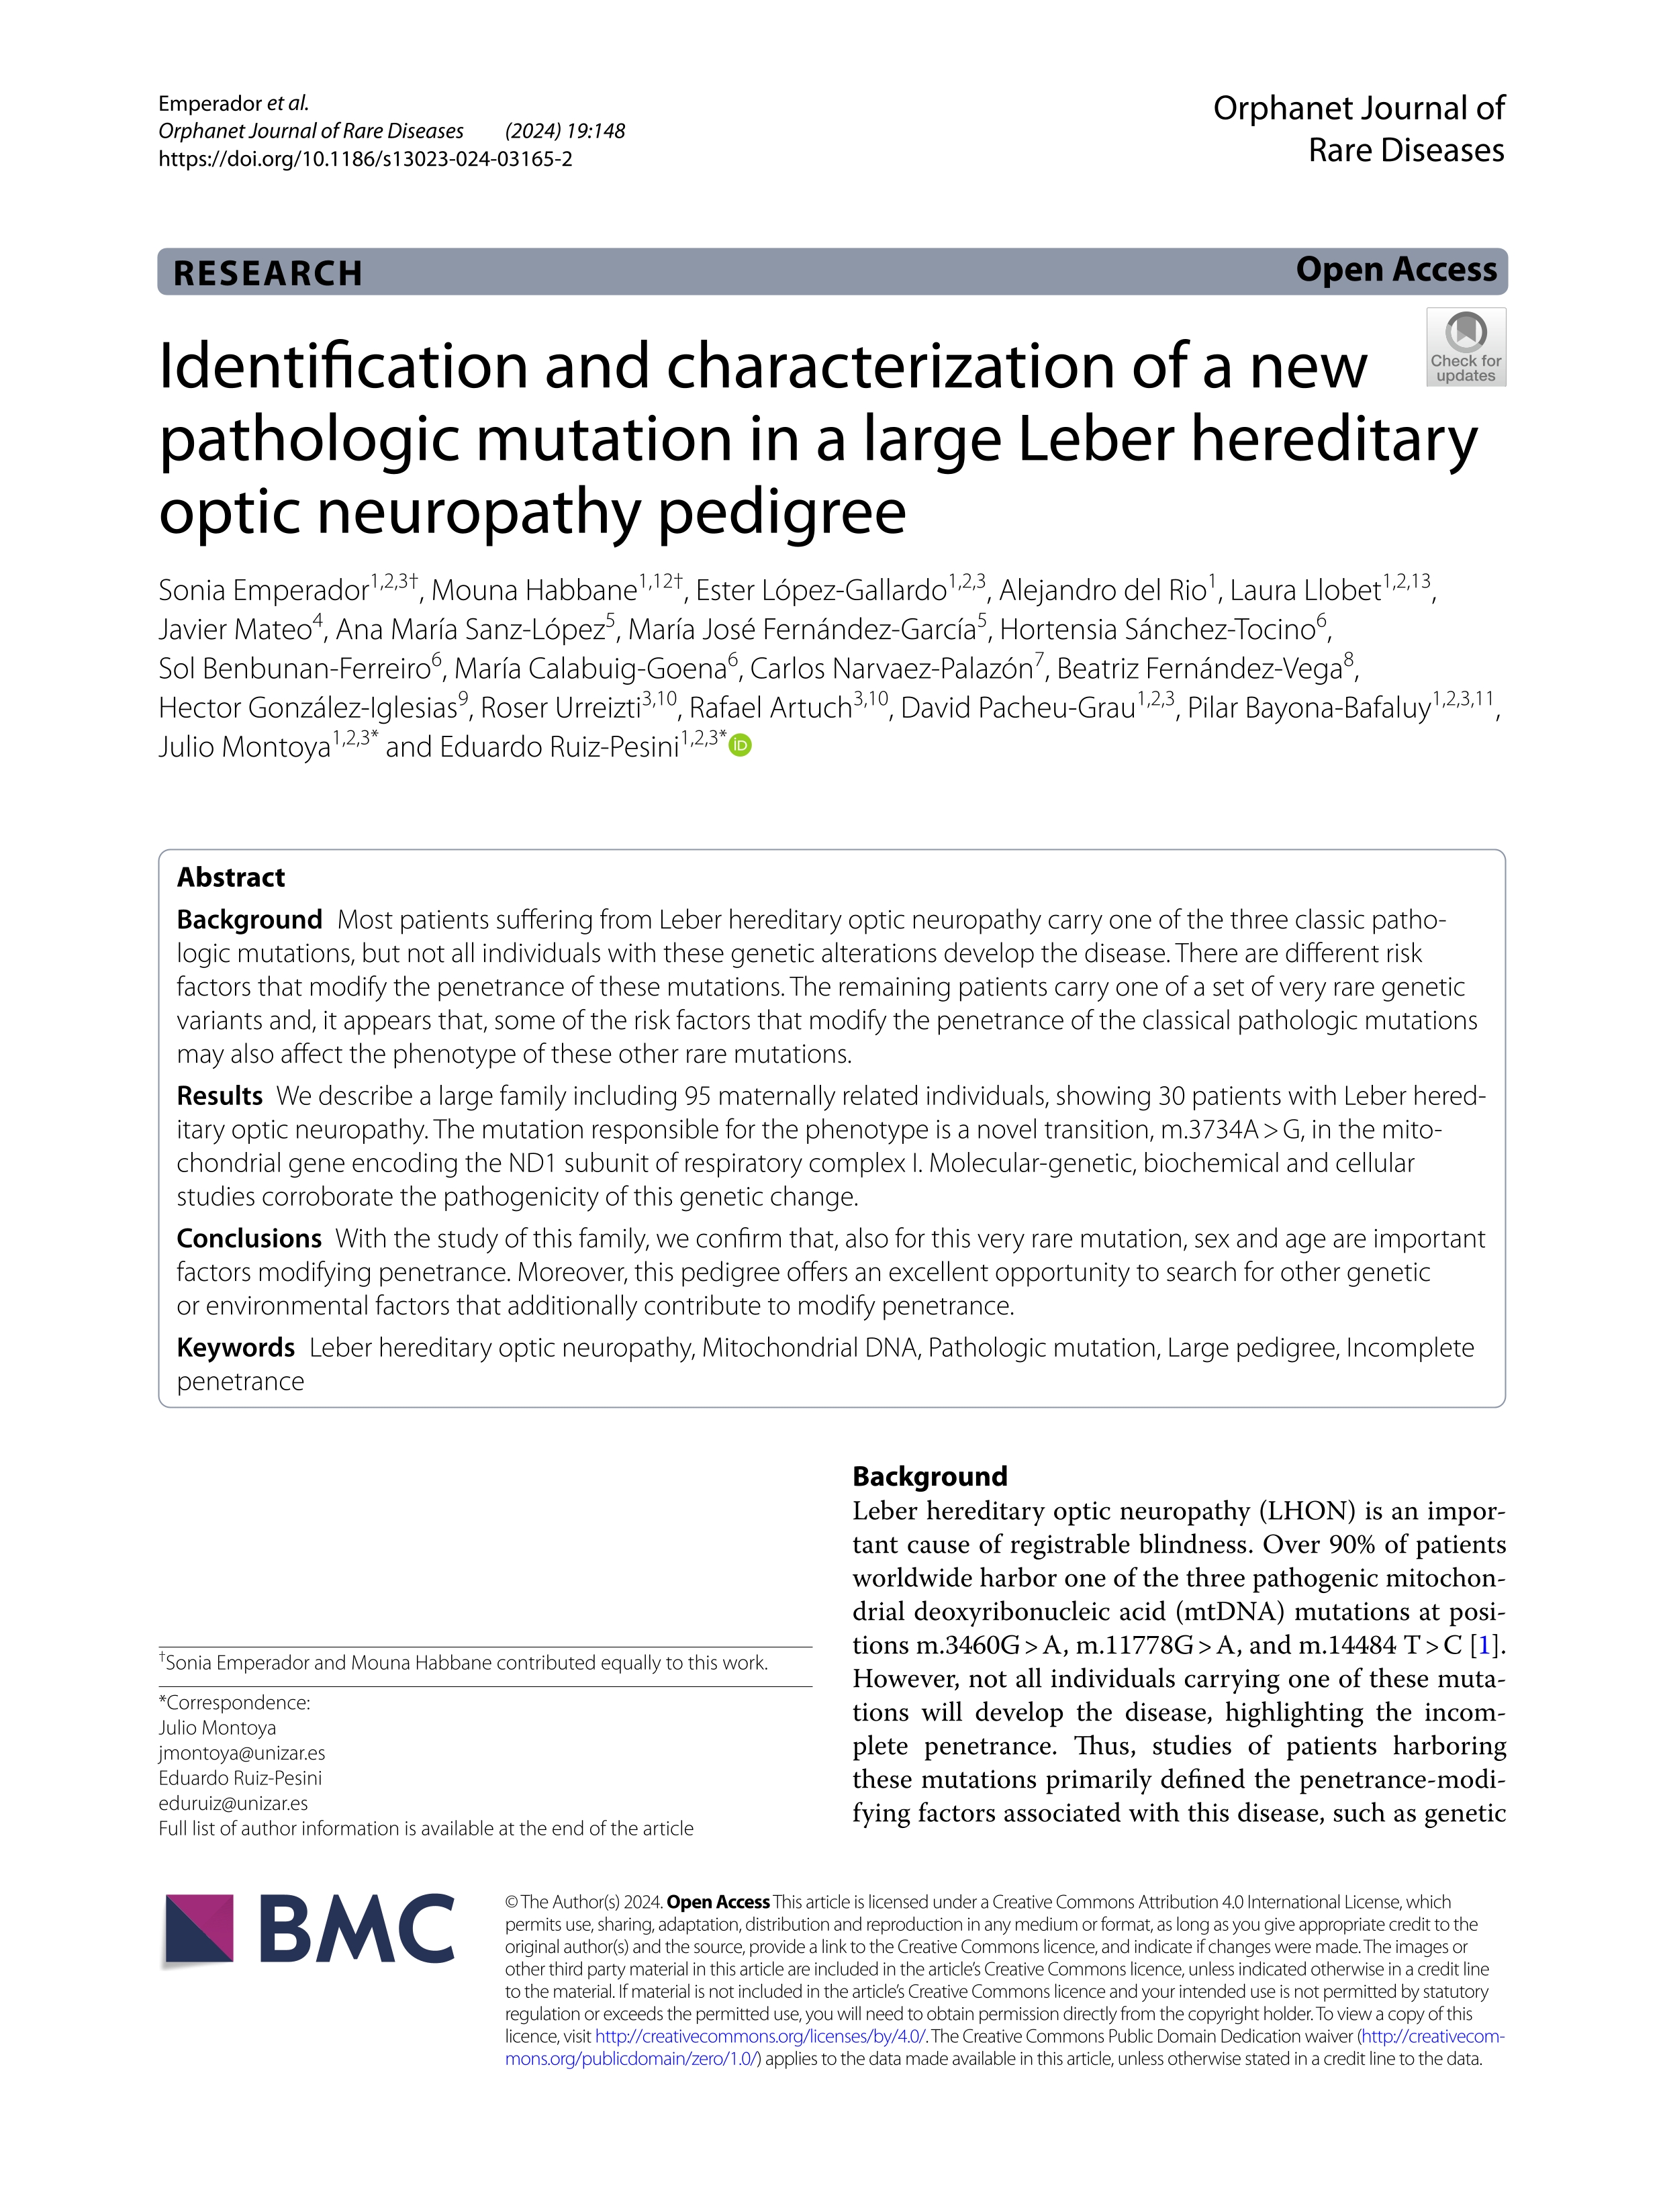 Identification and characterization of a new pathologic mutation in a large Leber hereditary optic neuropathy pedigree